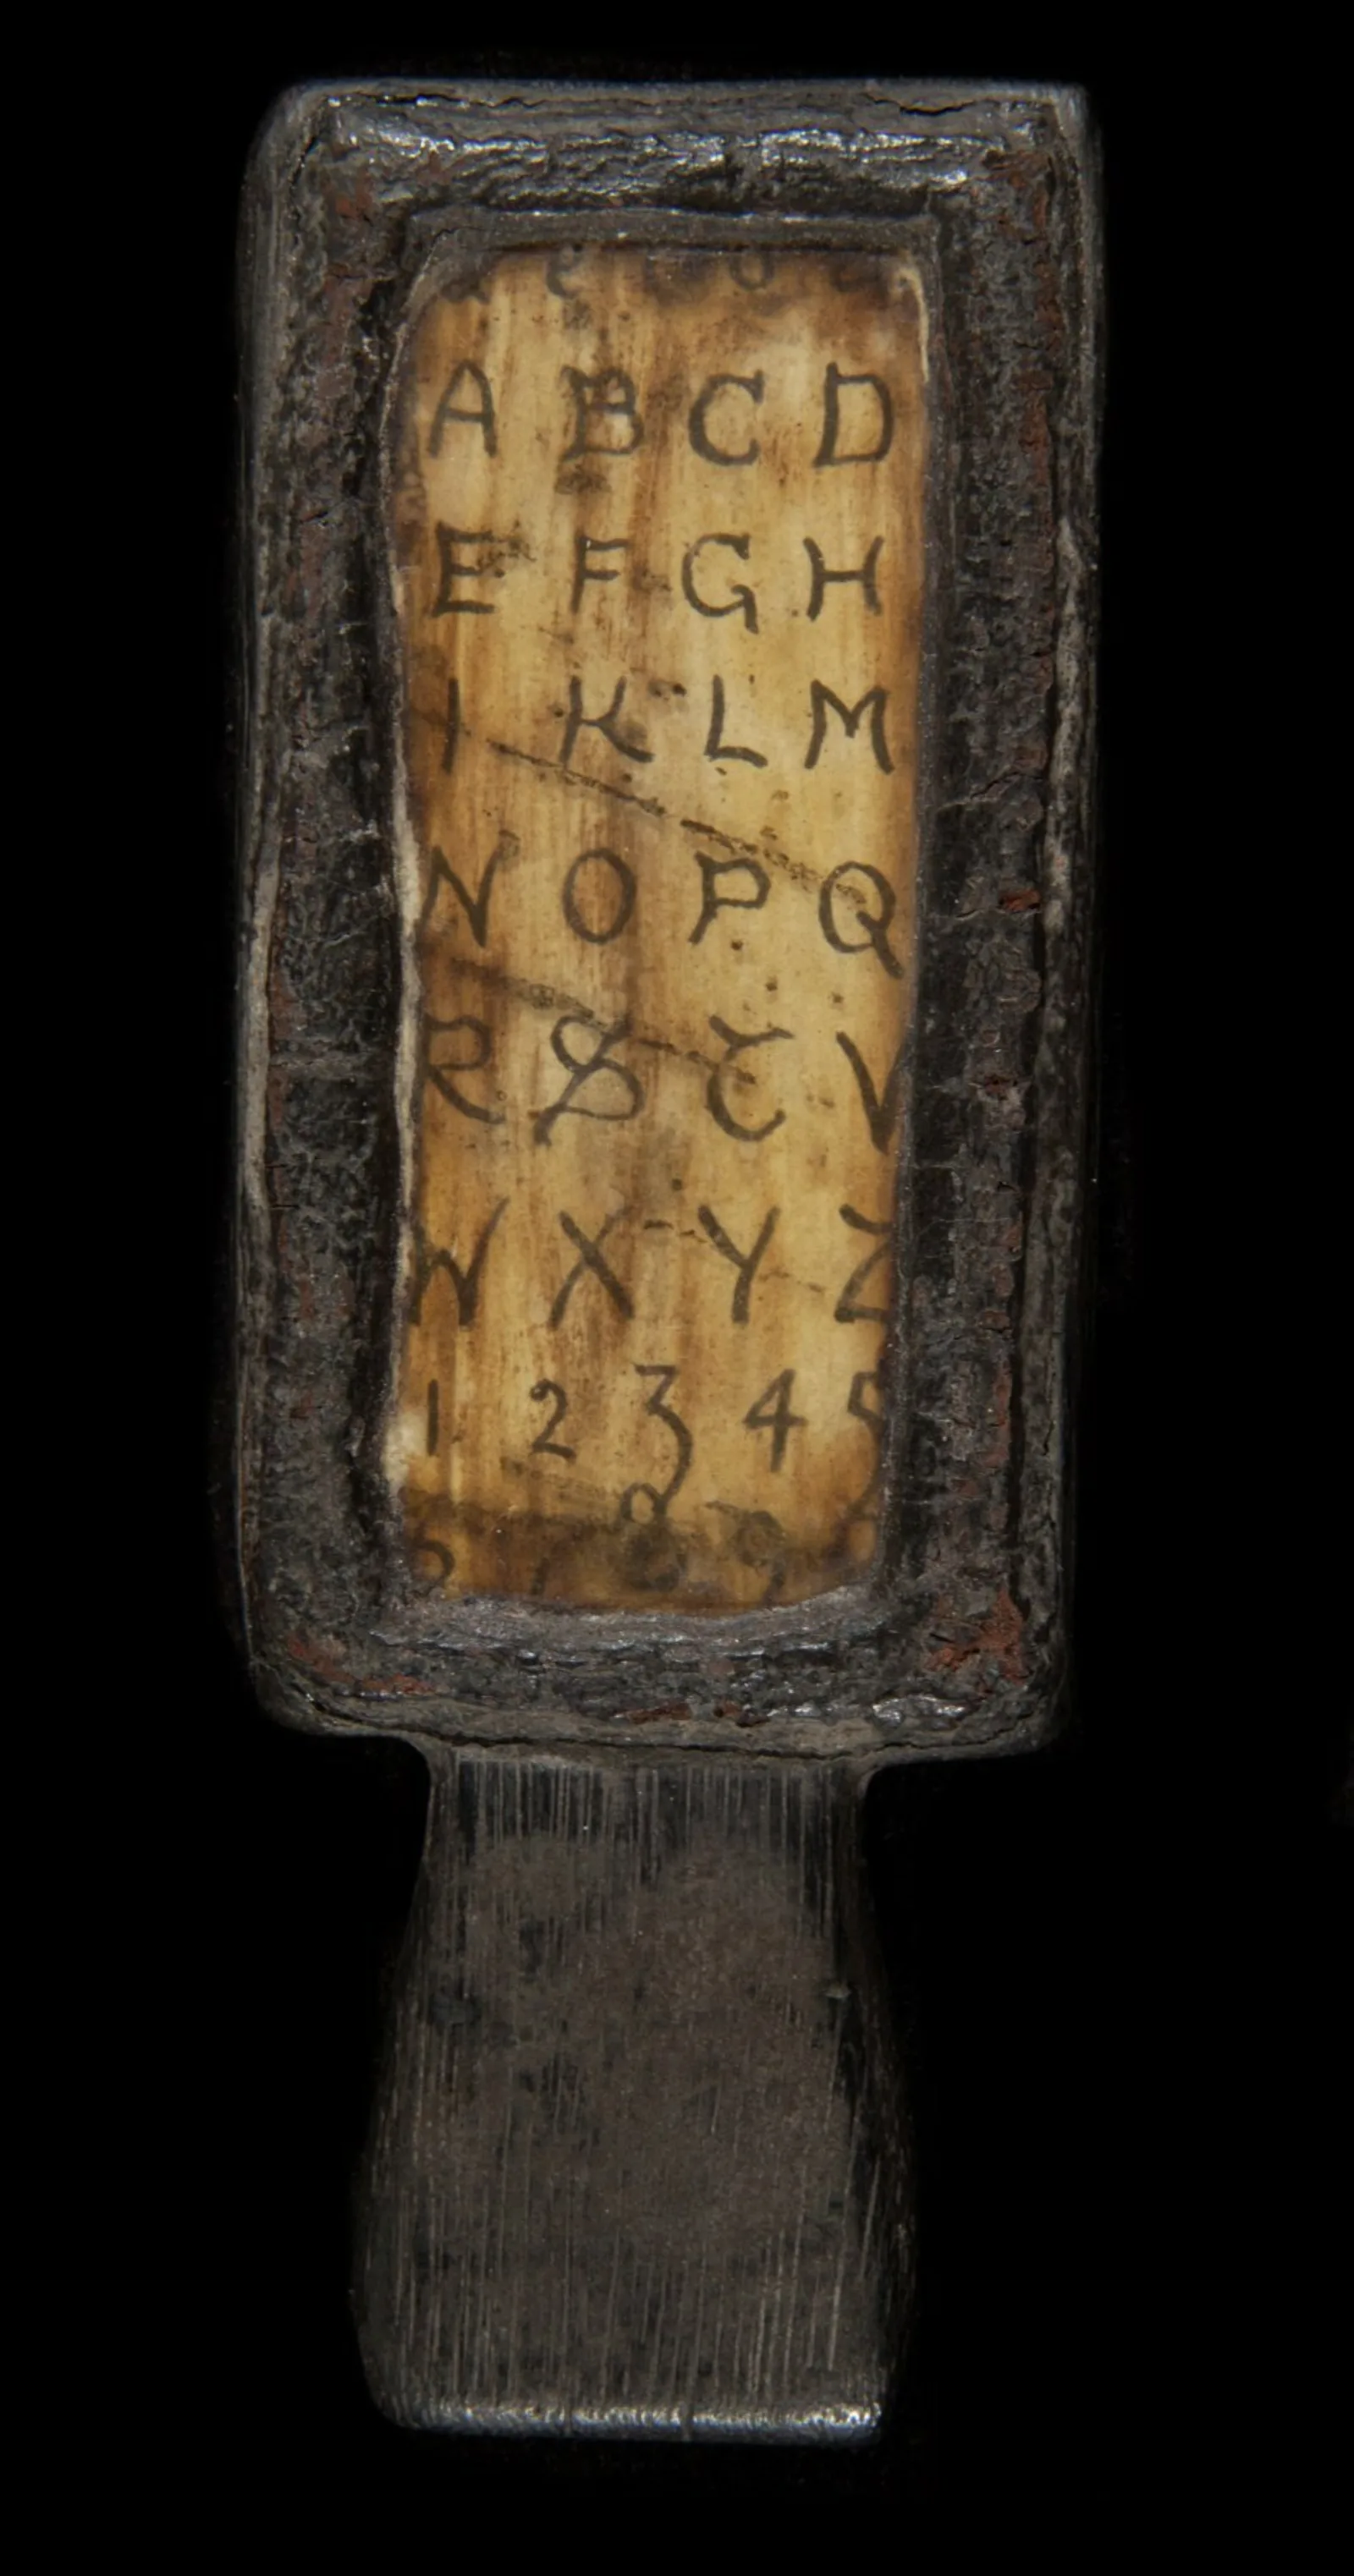 A small wooden paddle has a transparent screen running vertically. Under the screen is a handwritten alphabet. 